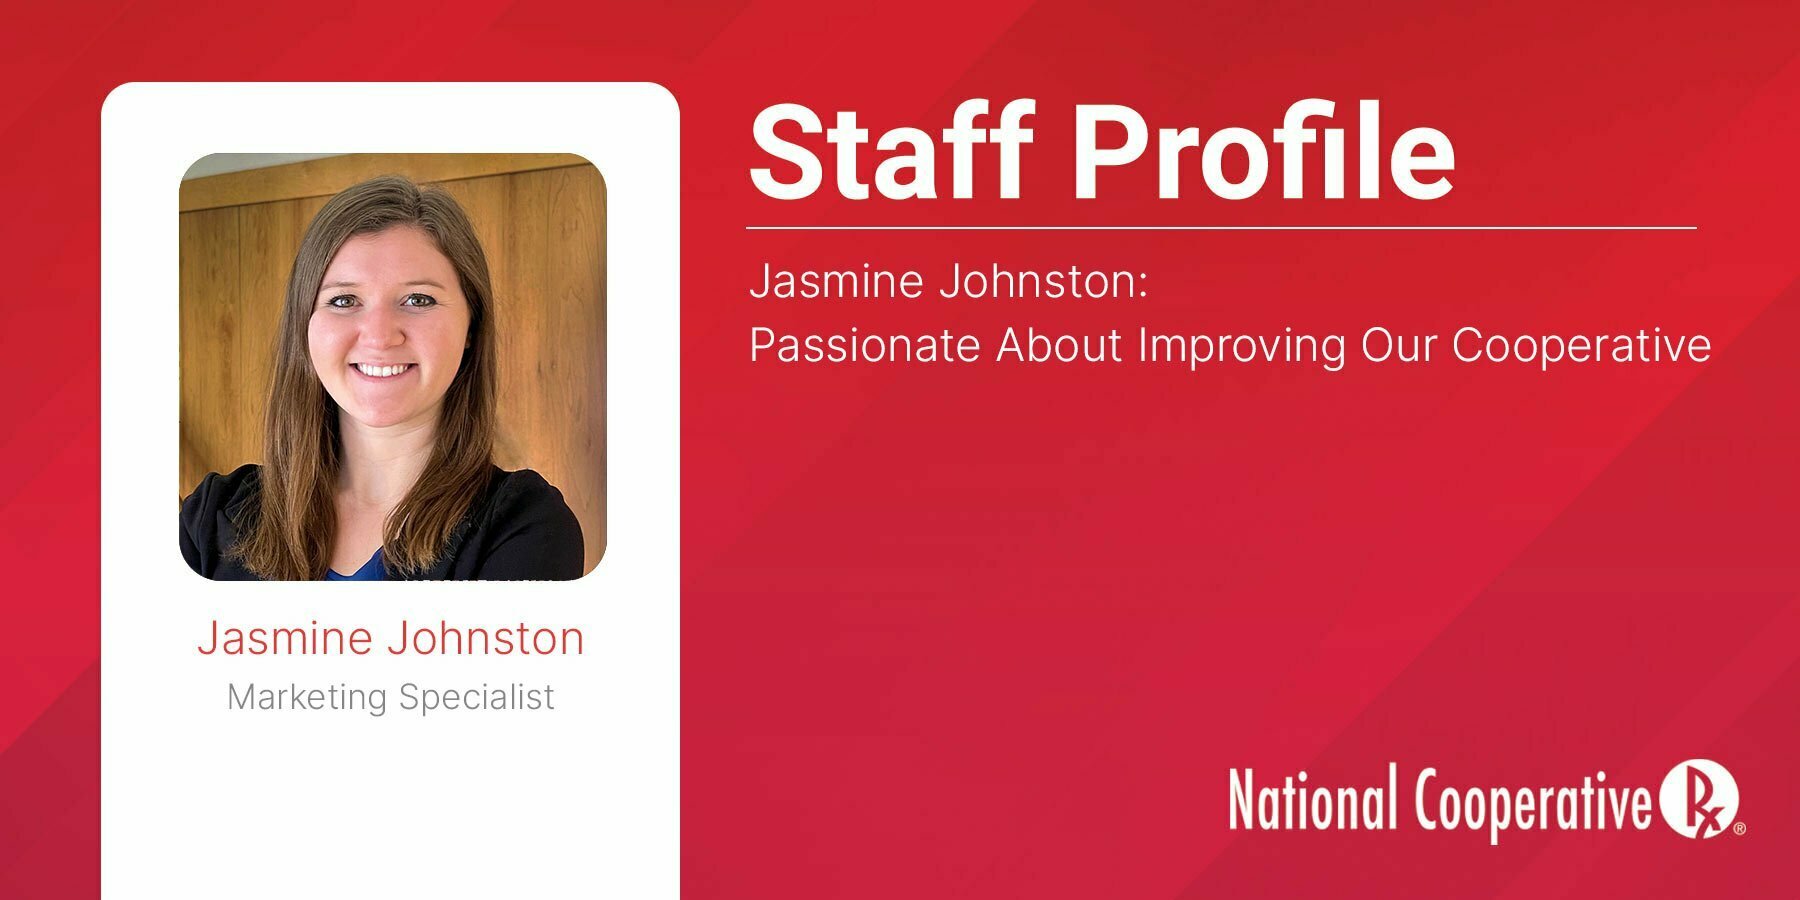 Staff profile for Jasmine Johnston